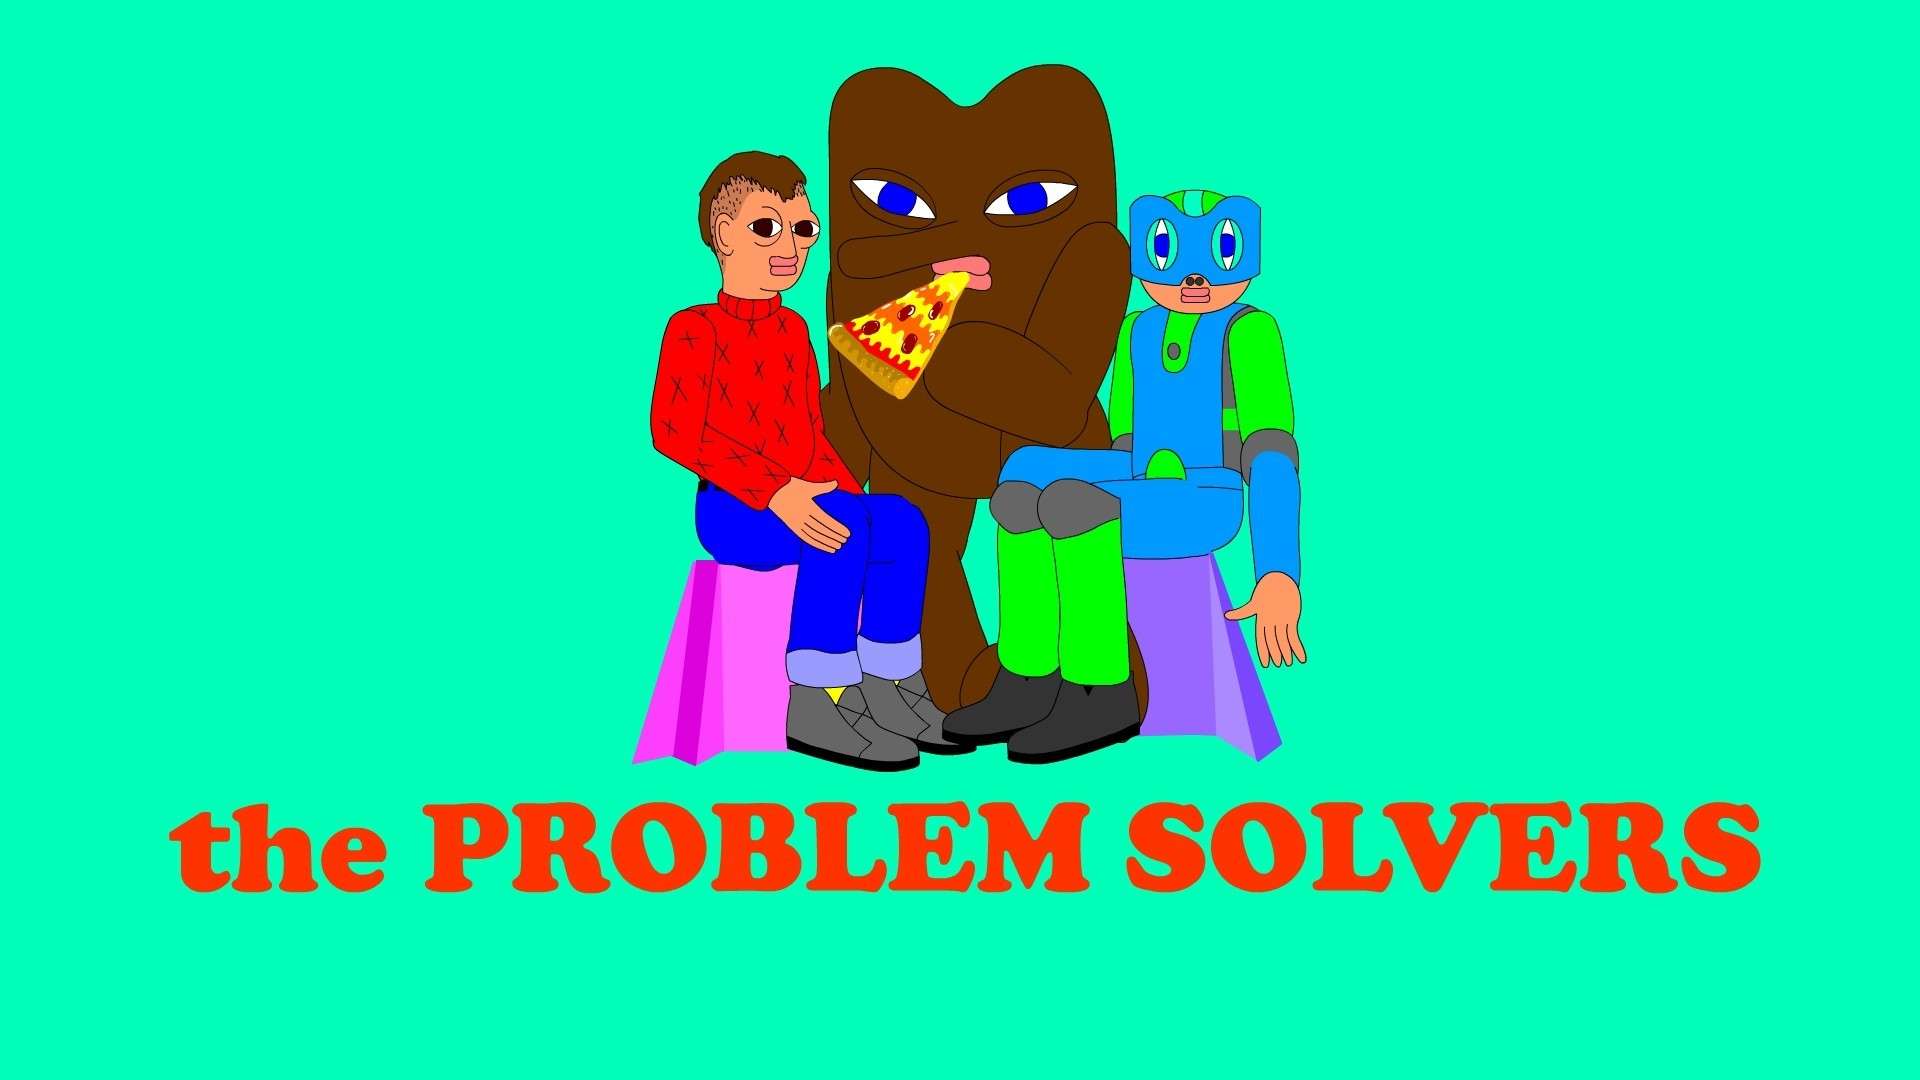 the problem solvers cartoon network